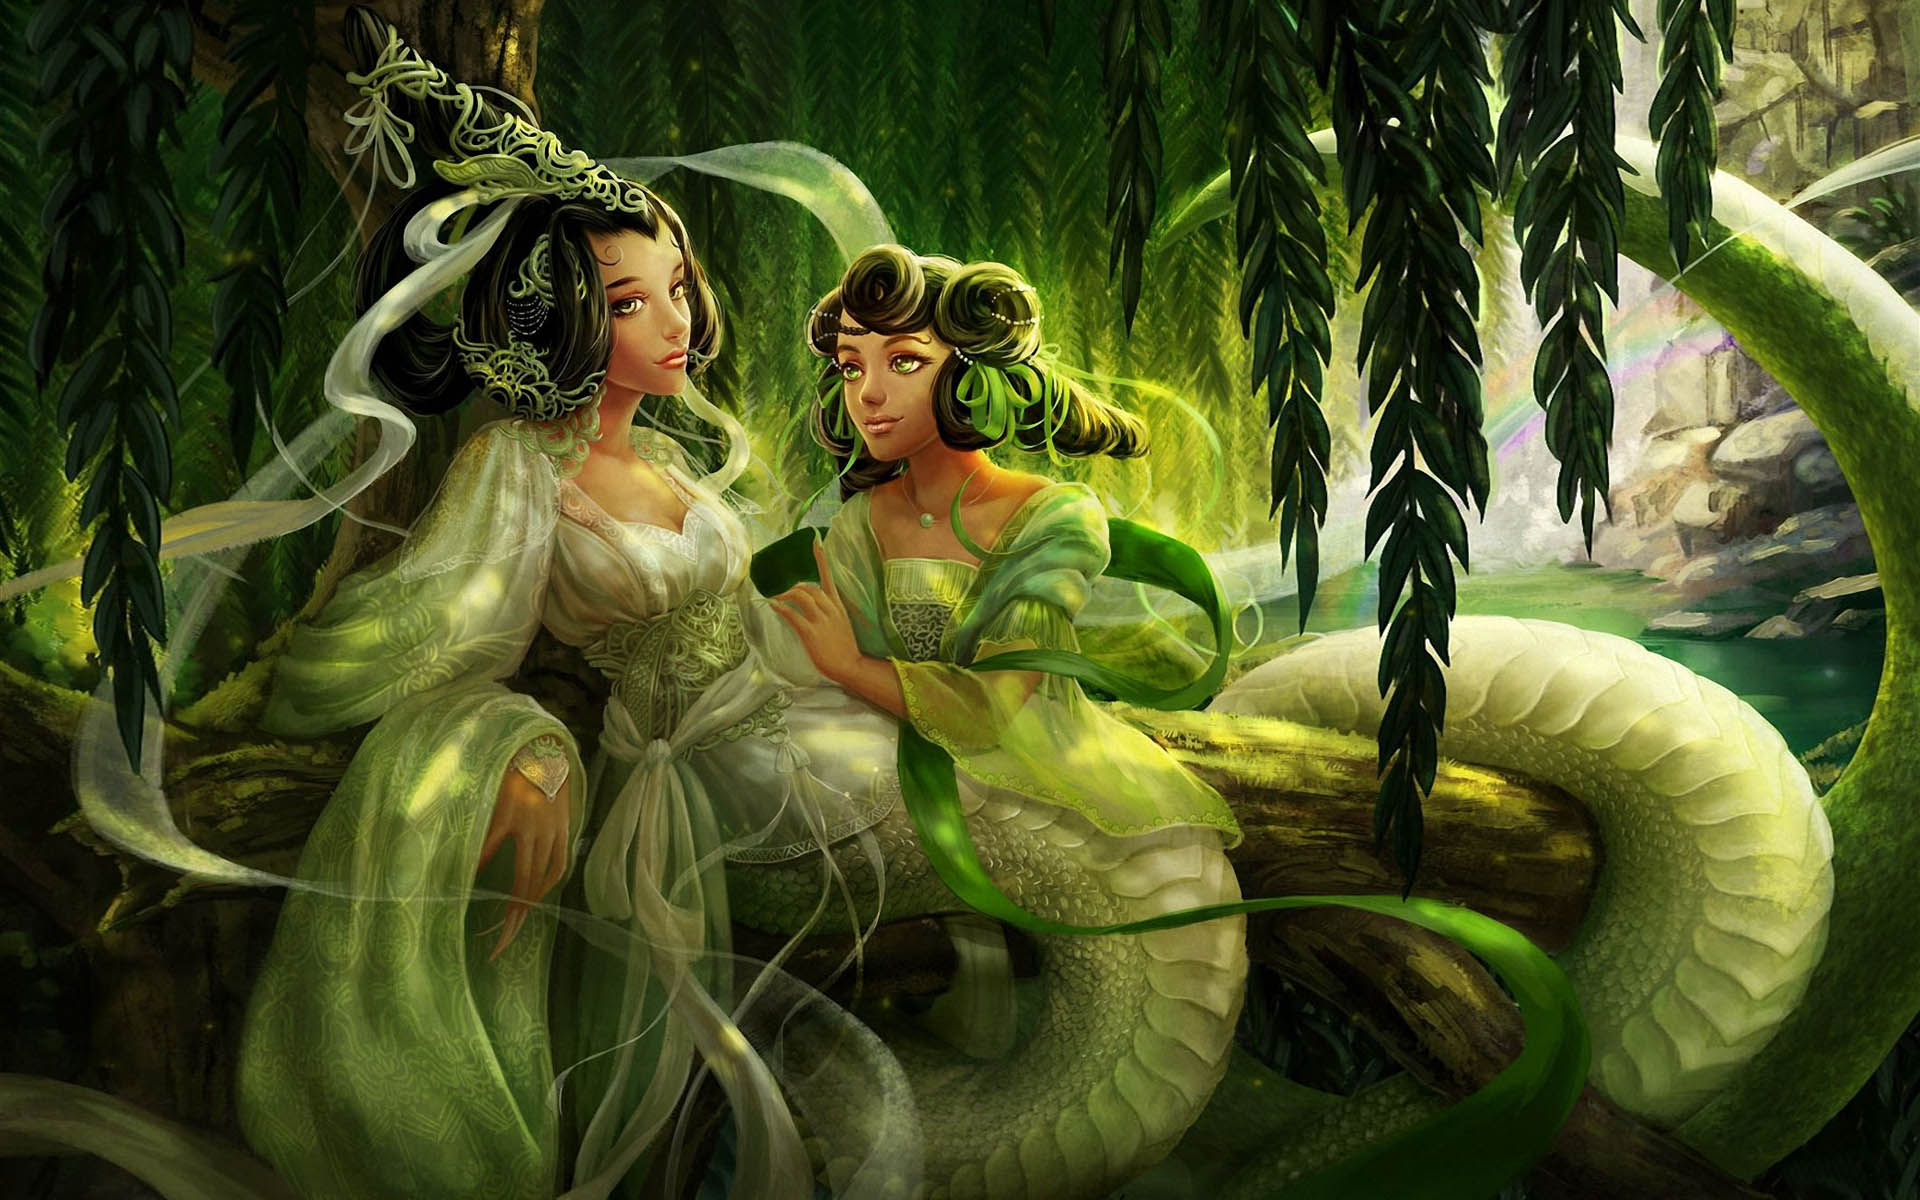 Demon Green Snake Ladies twins Fantasy art Wallpaper, Wallpaper13.com